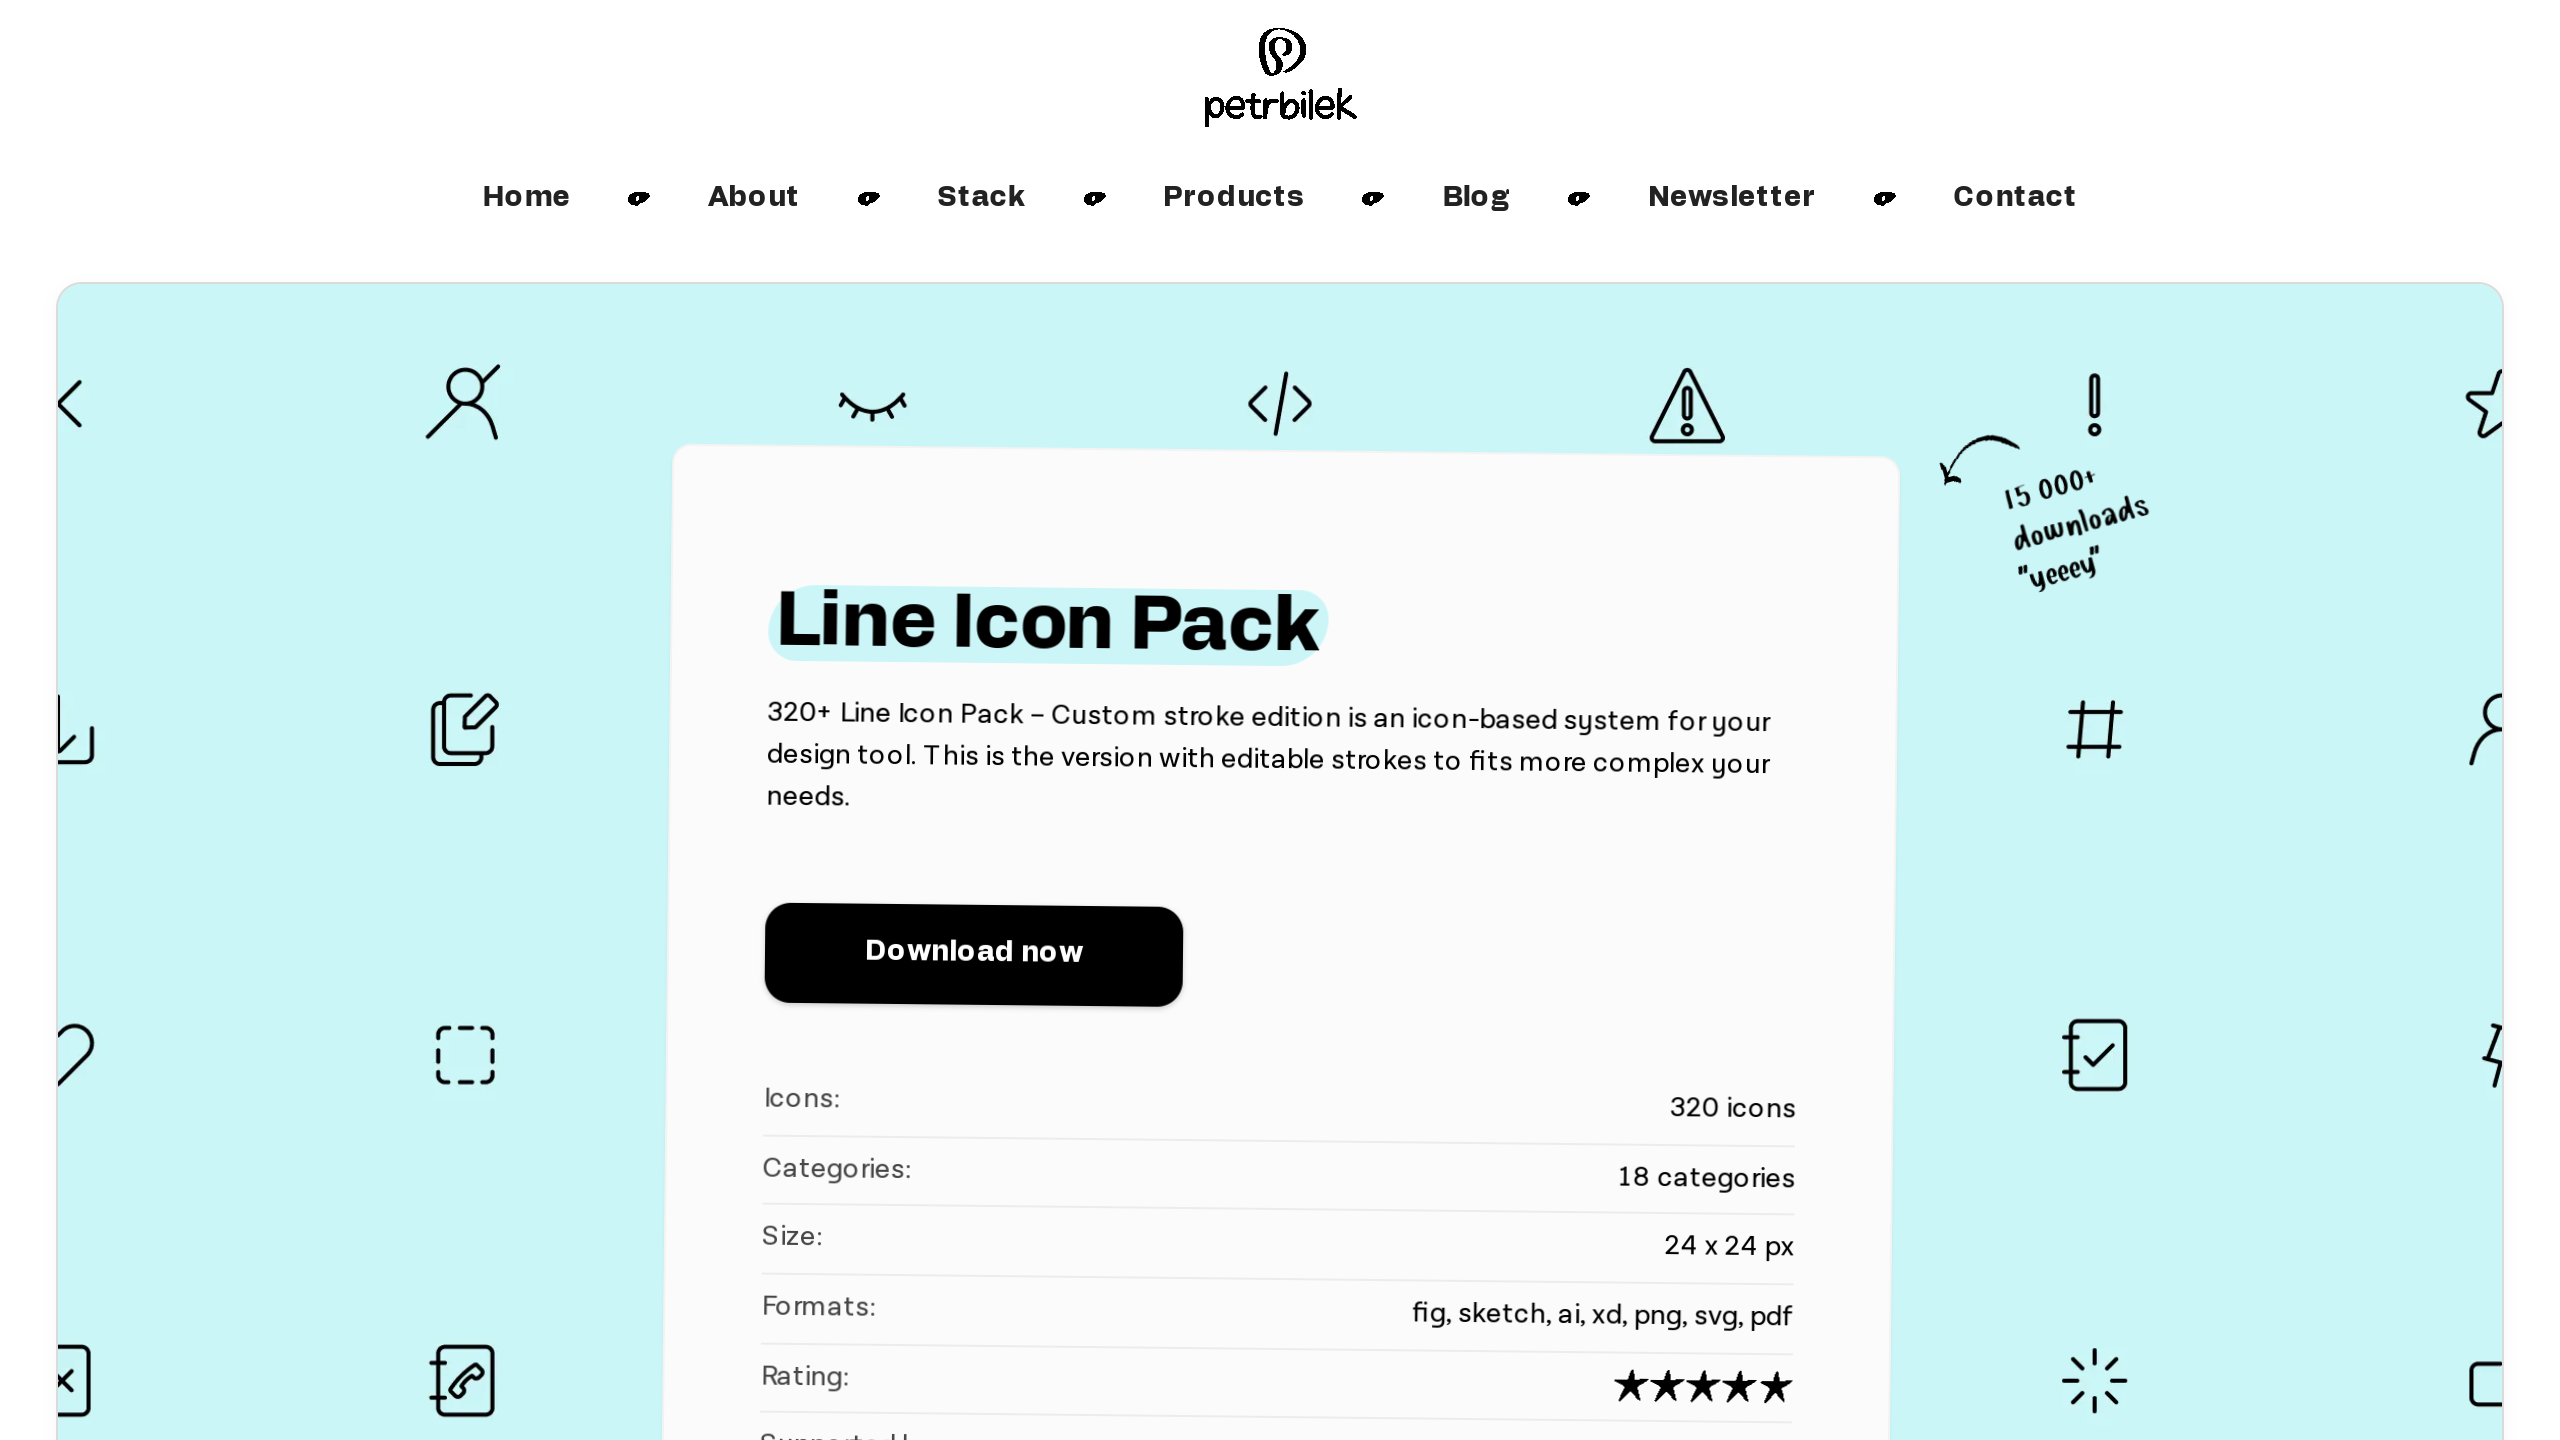 Line Icon Pack's website screenshot